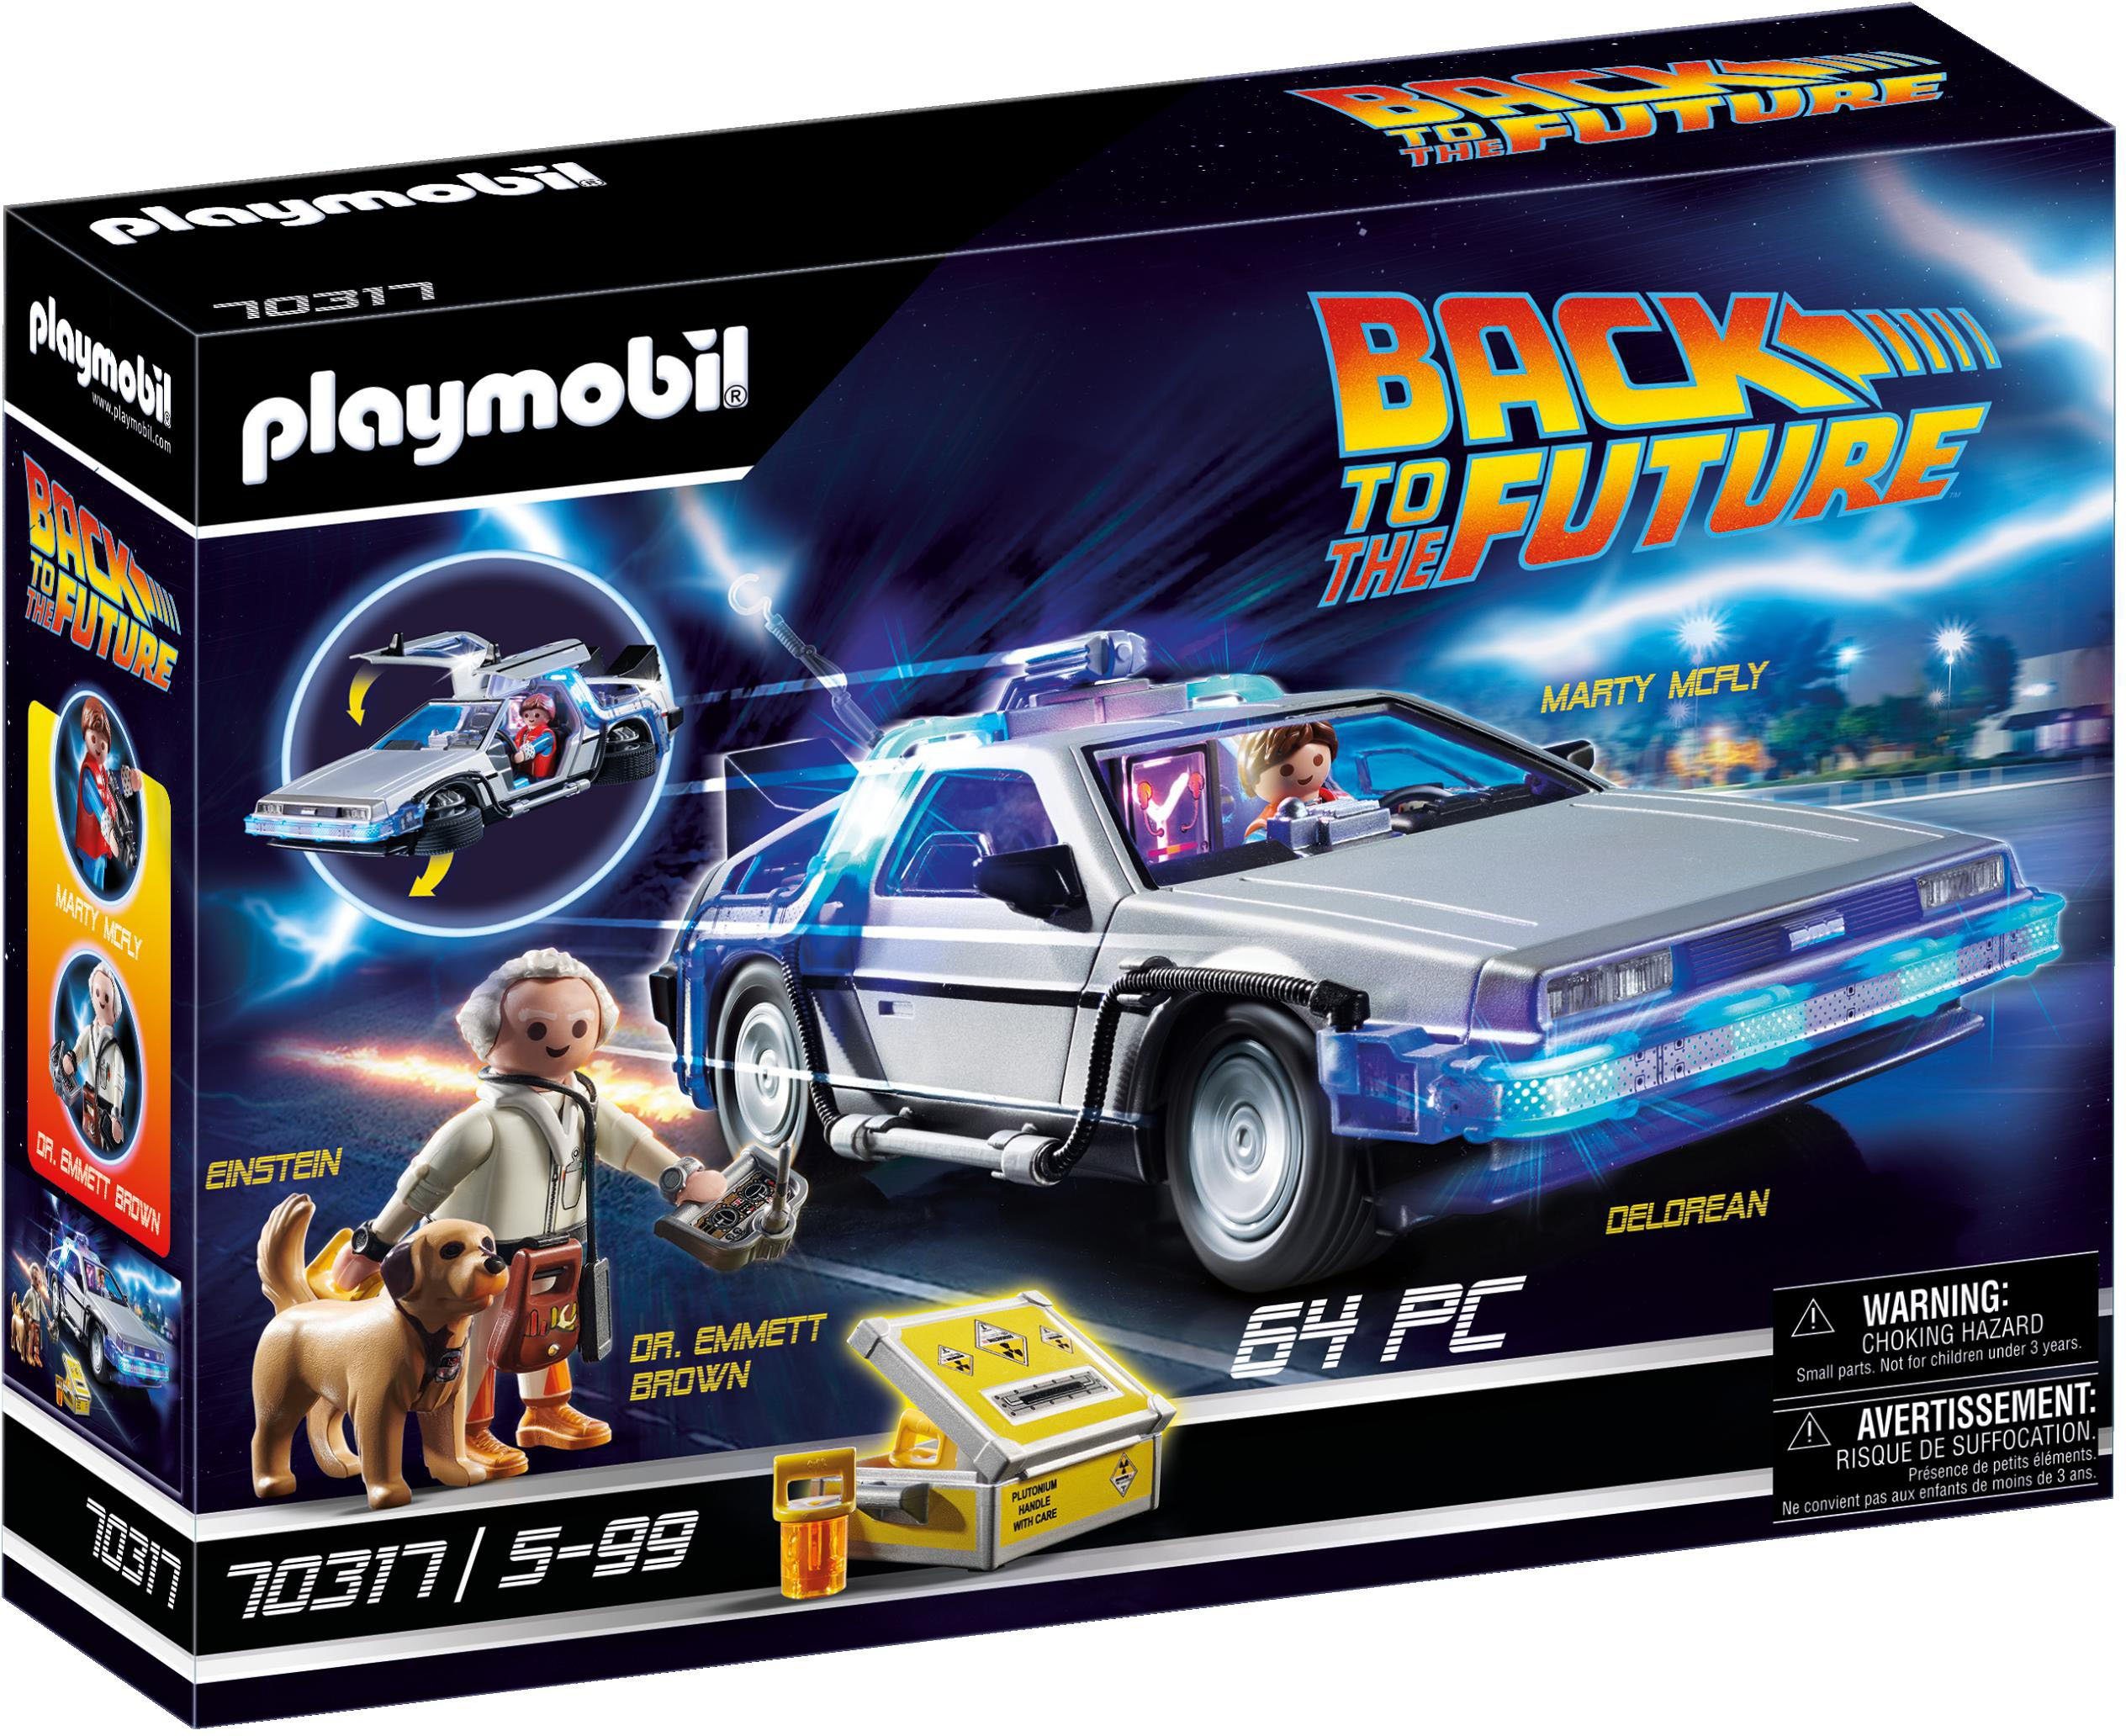 Playmobil bringt den Porsche Mission E ins Kinderzimmer